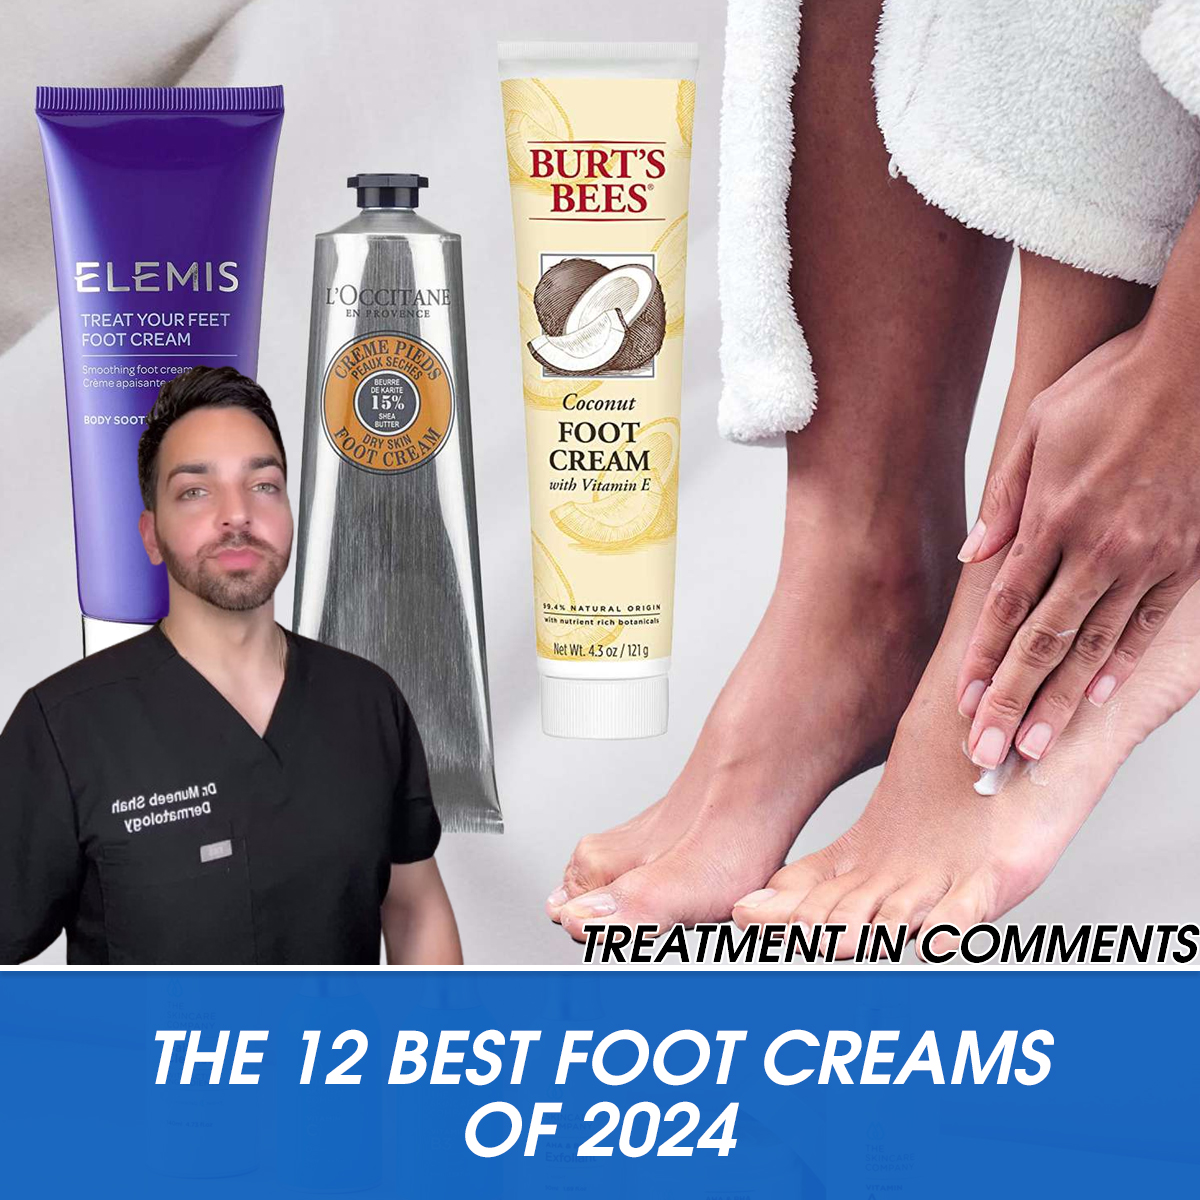 The 12 Best Foot Creams of 2024